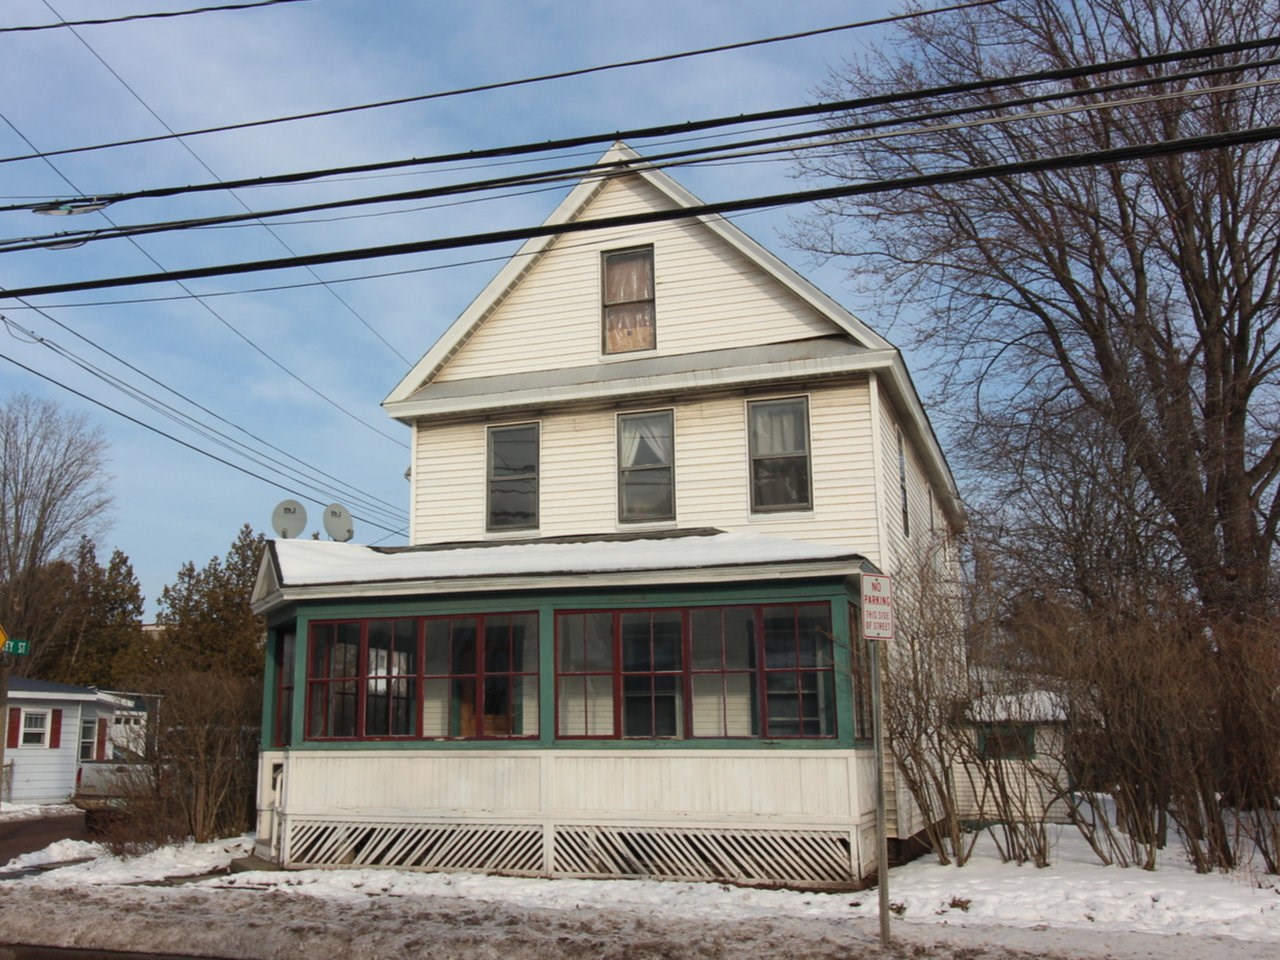 Sold property in Burlington